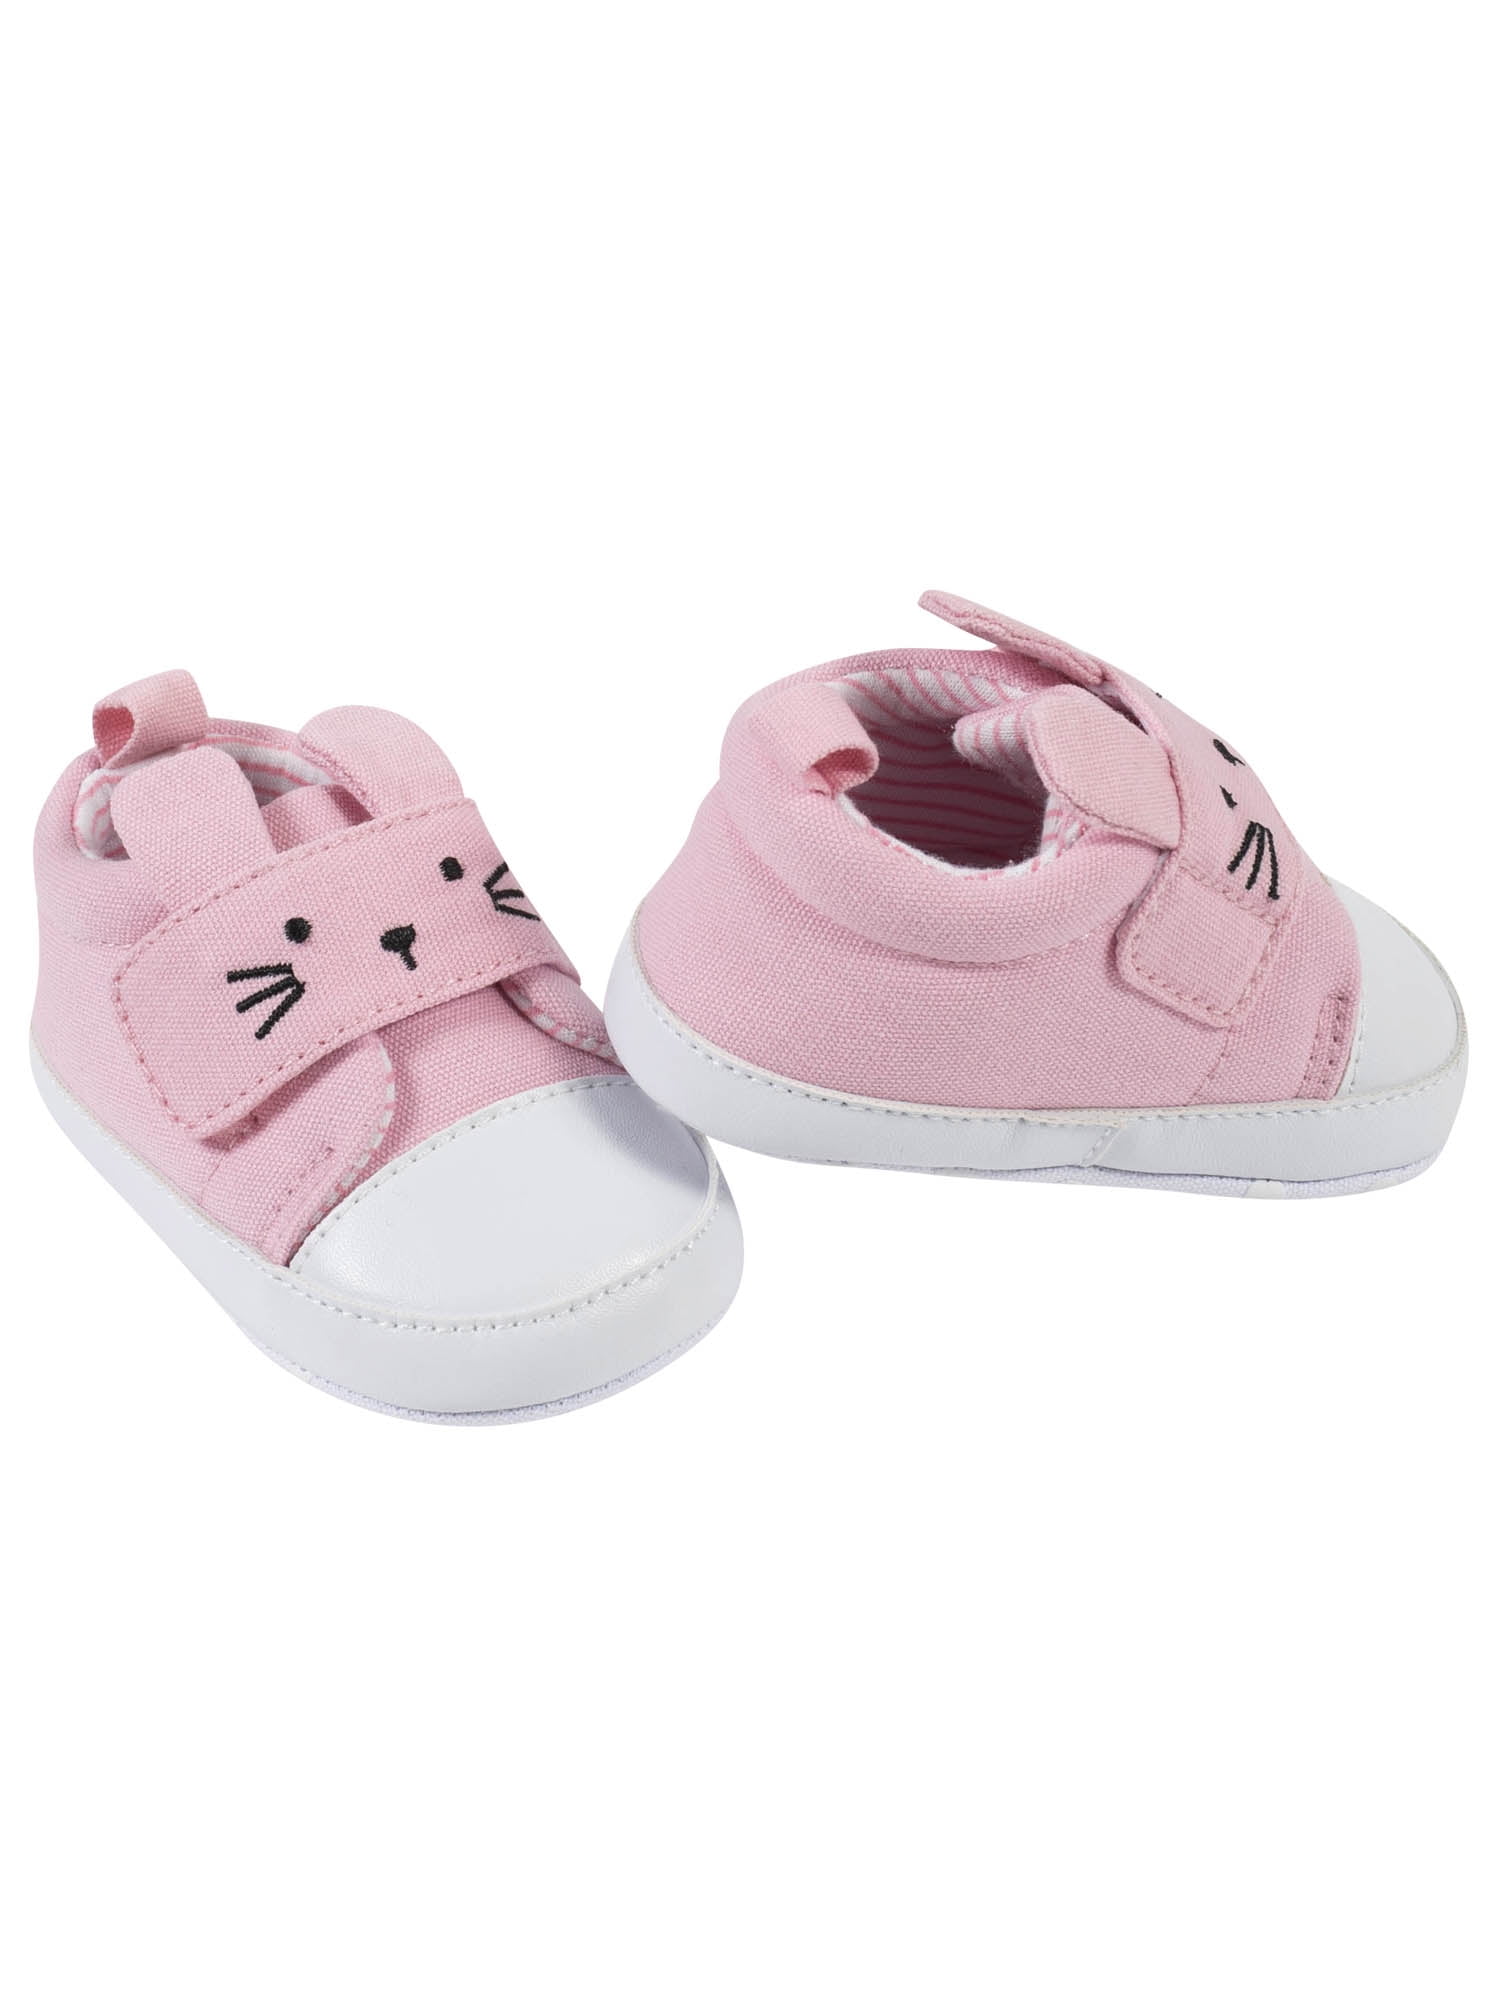 Baby Girl I Love Mum/ I Love Dad Canvas Pink White Summer Pram Shoes Printed 0-3 